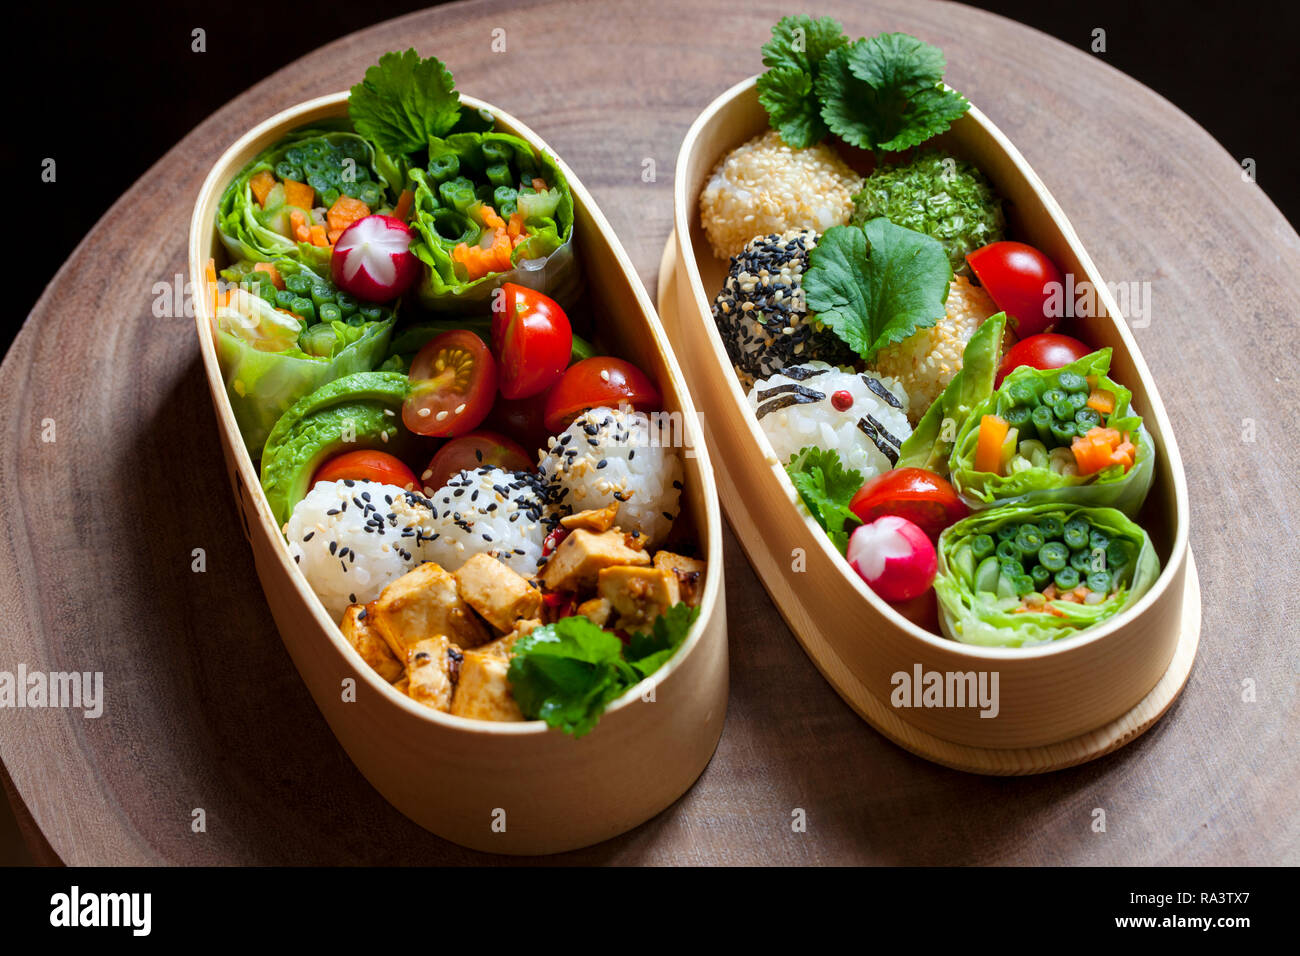 https://c8.alamy.com/comp/RA3TX7/colorful-vegan-bento-lunch-box-with-green-vegetables-and-tofu-RA3TX7.jpg